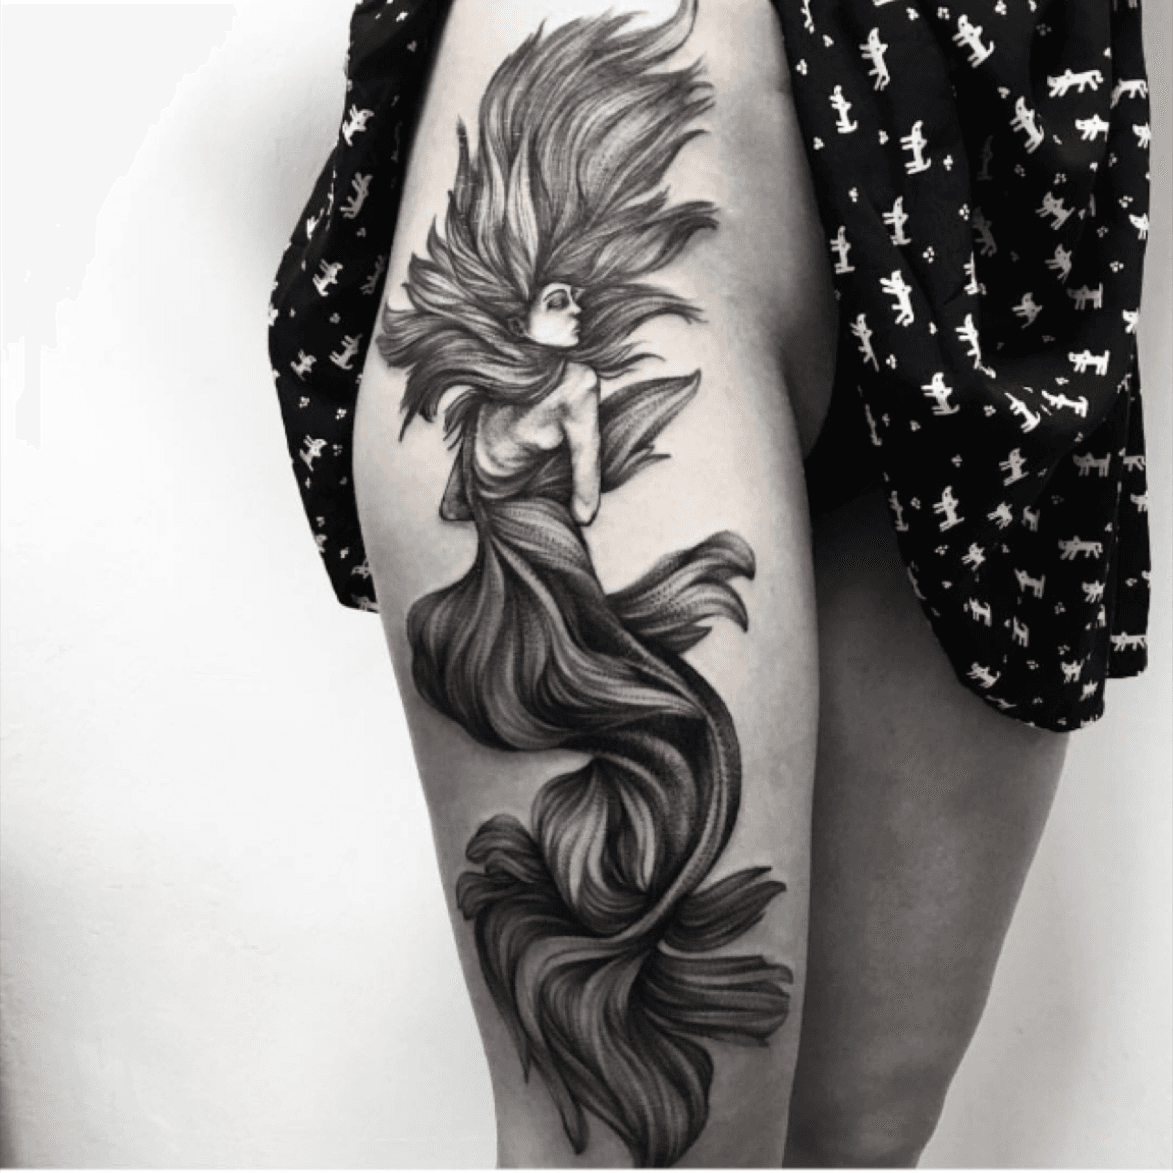 Aquarius tribal mermaid tattoo design by maryobiago on DeviantArt